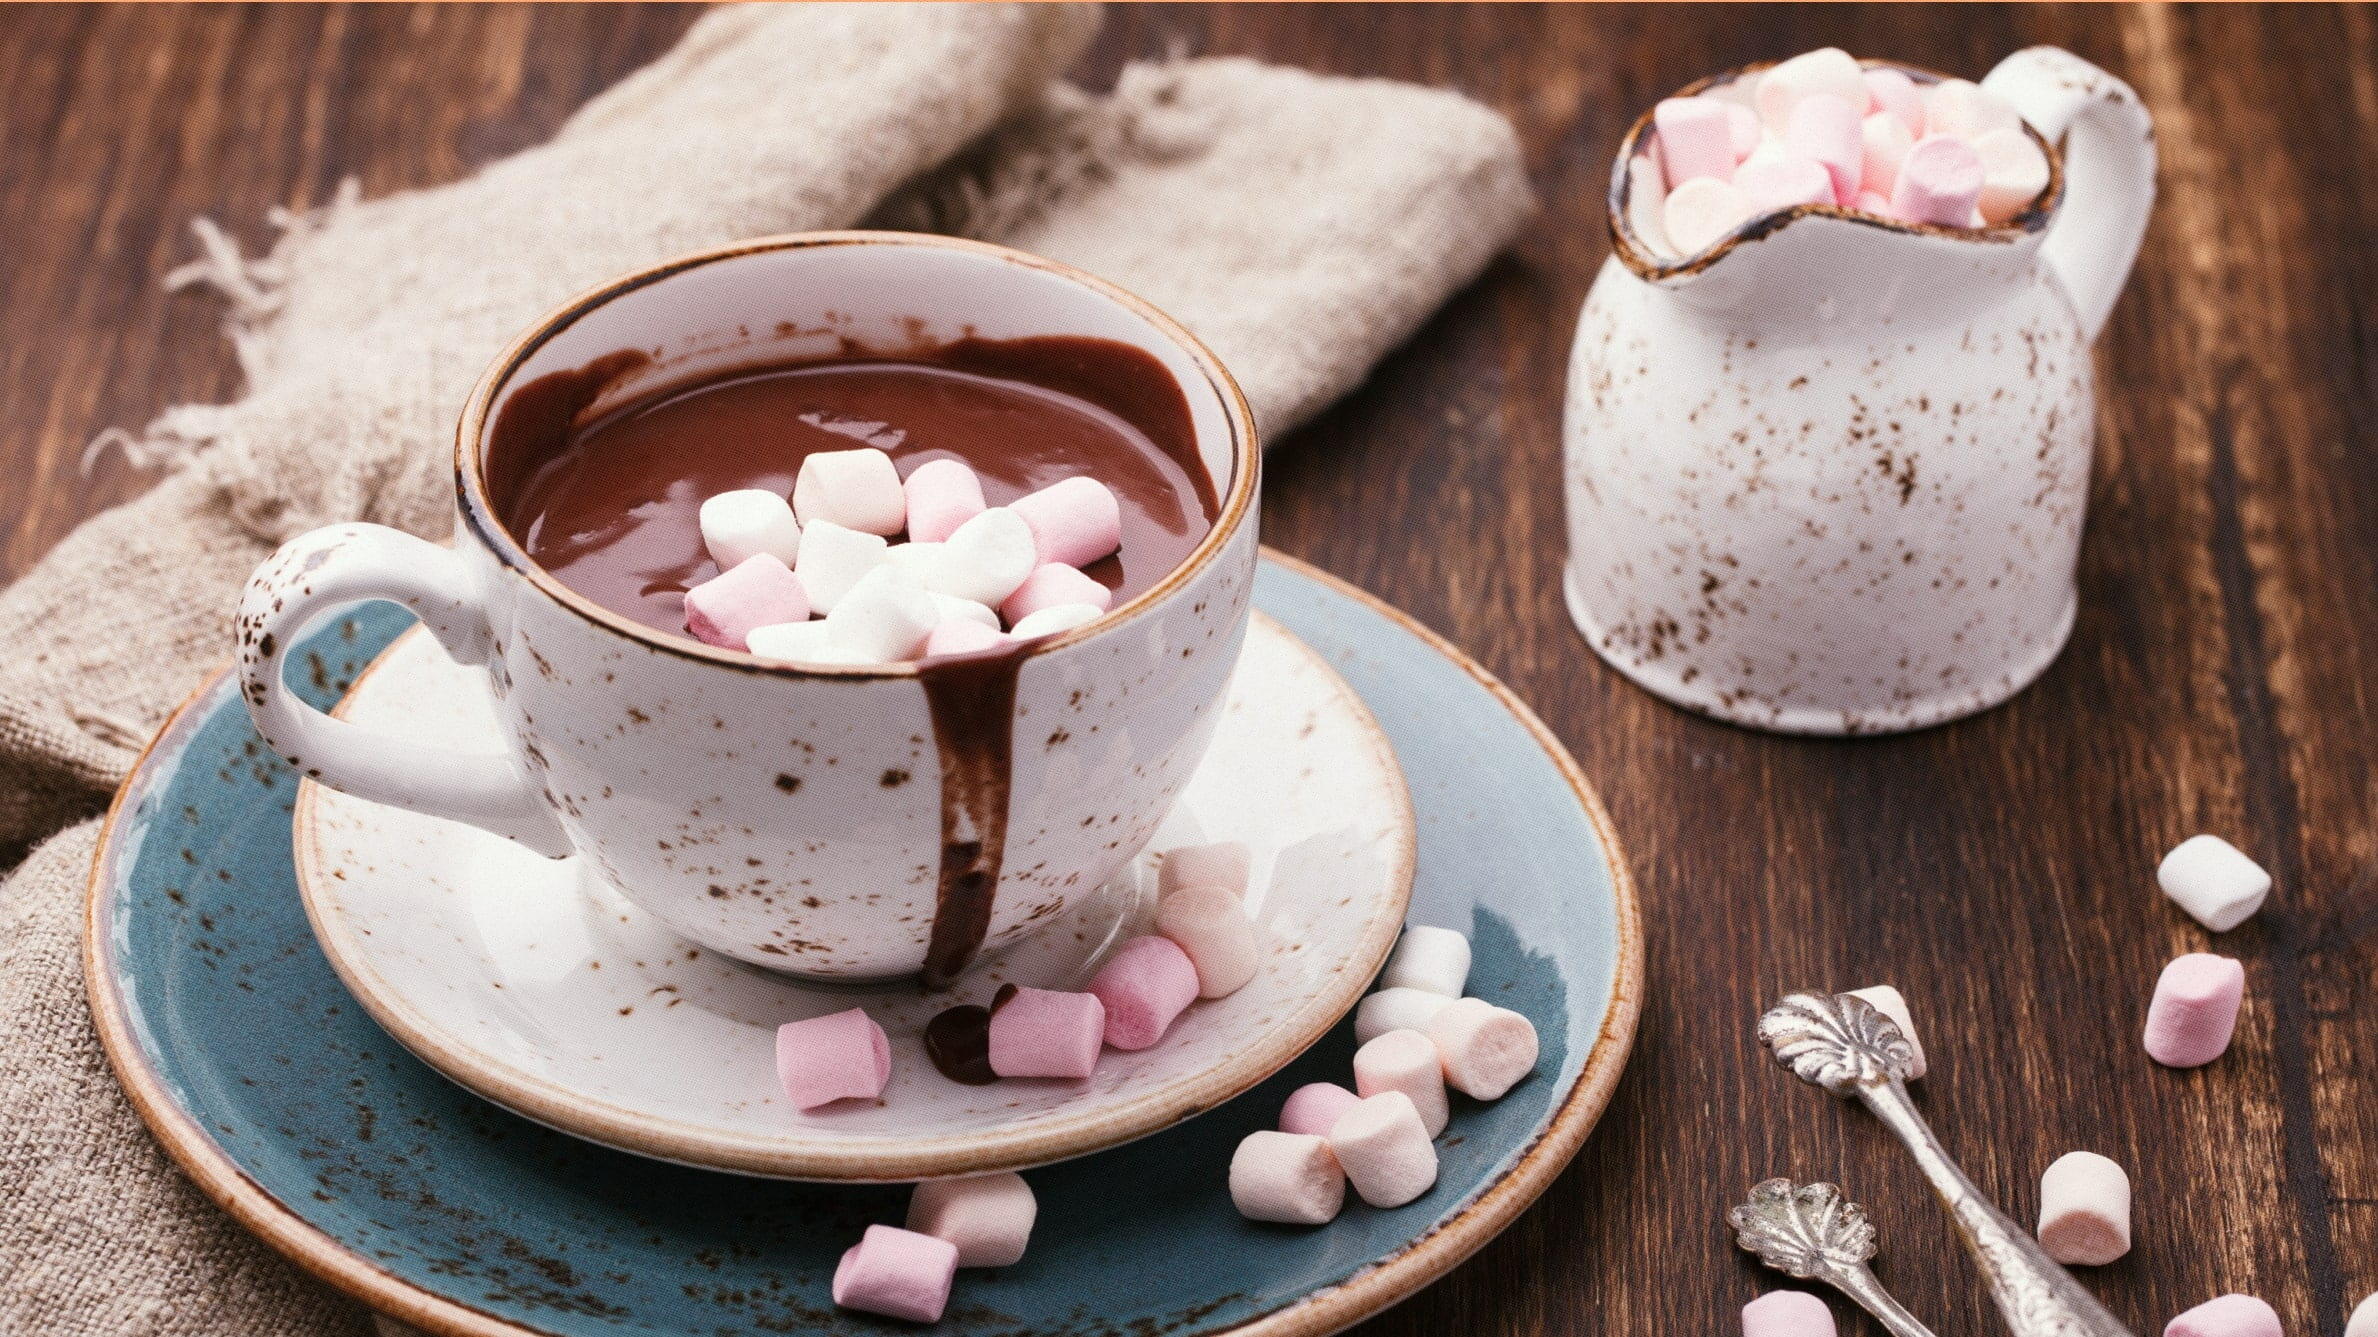 Горячий шоколад из шоколада в домашних условиях - рецепт